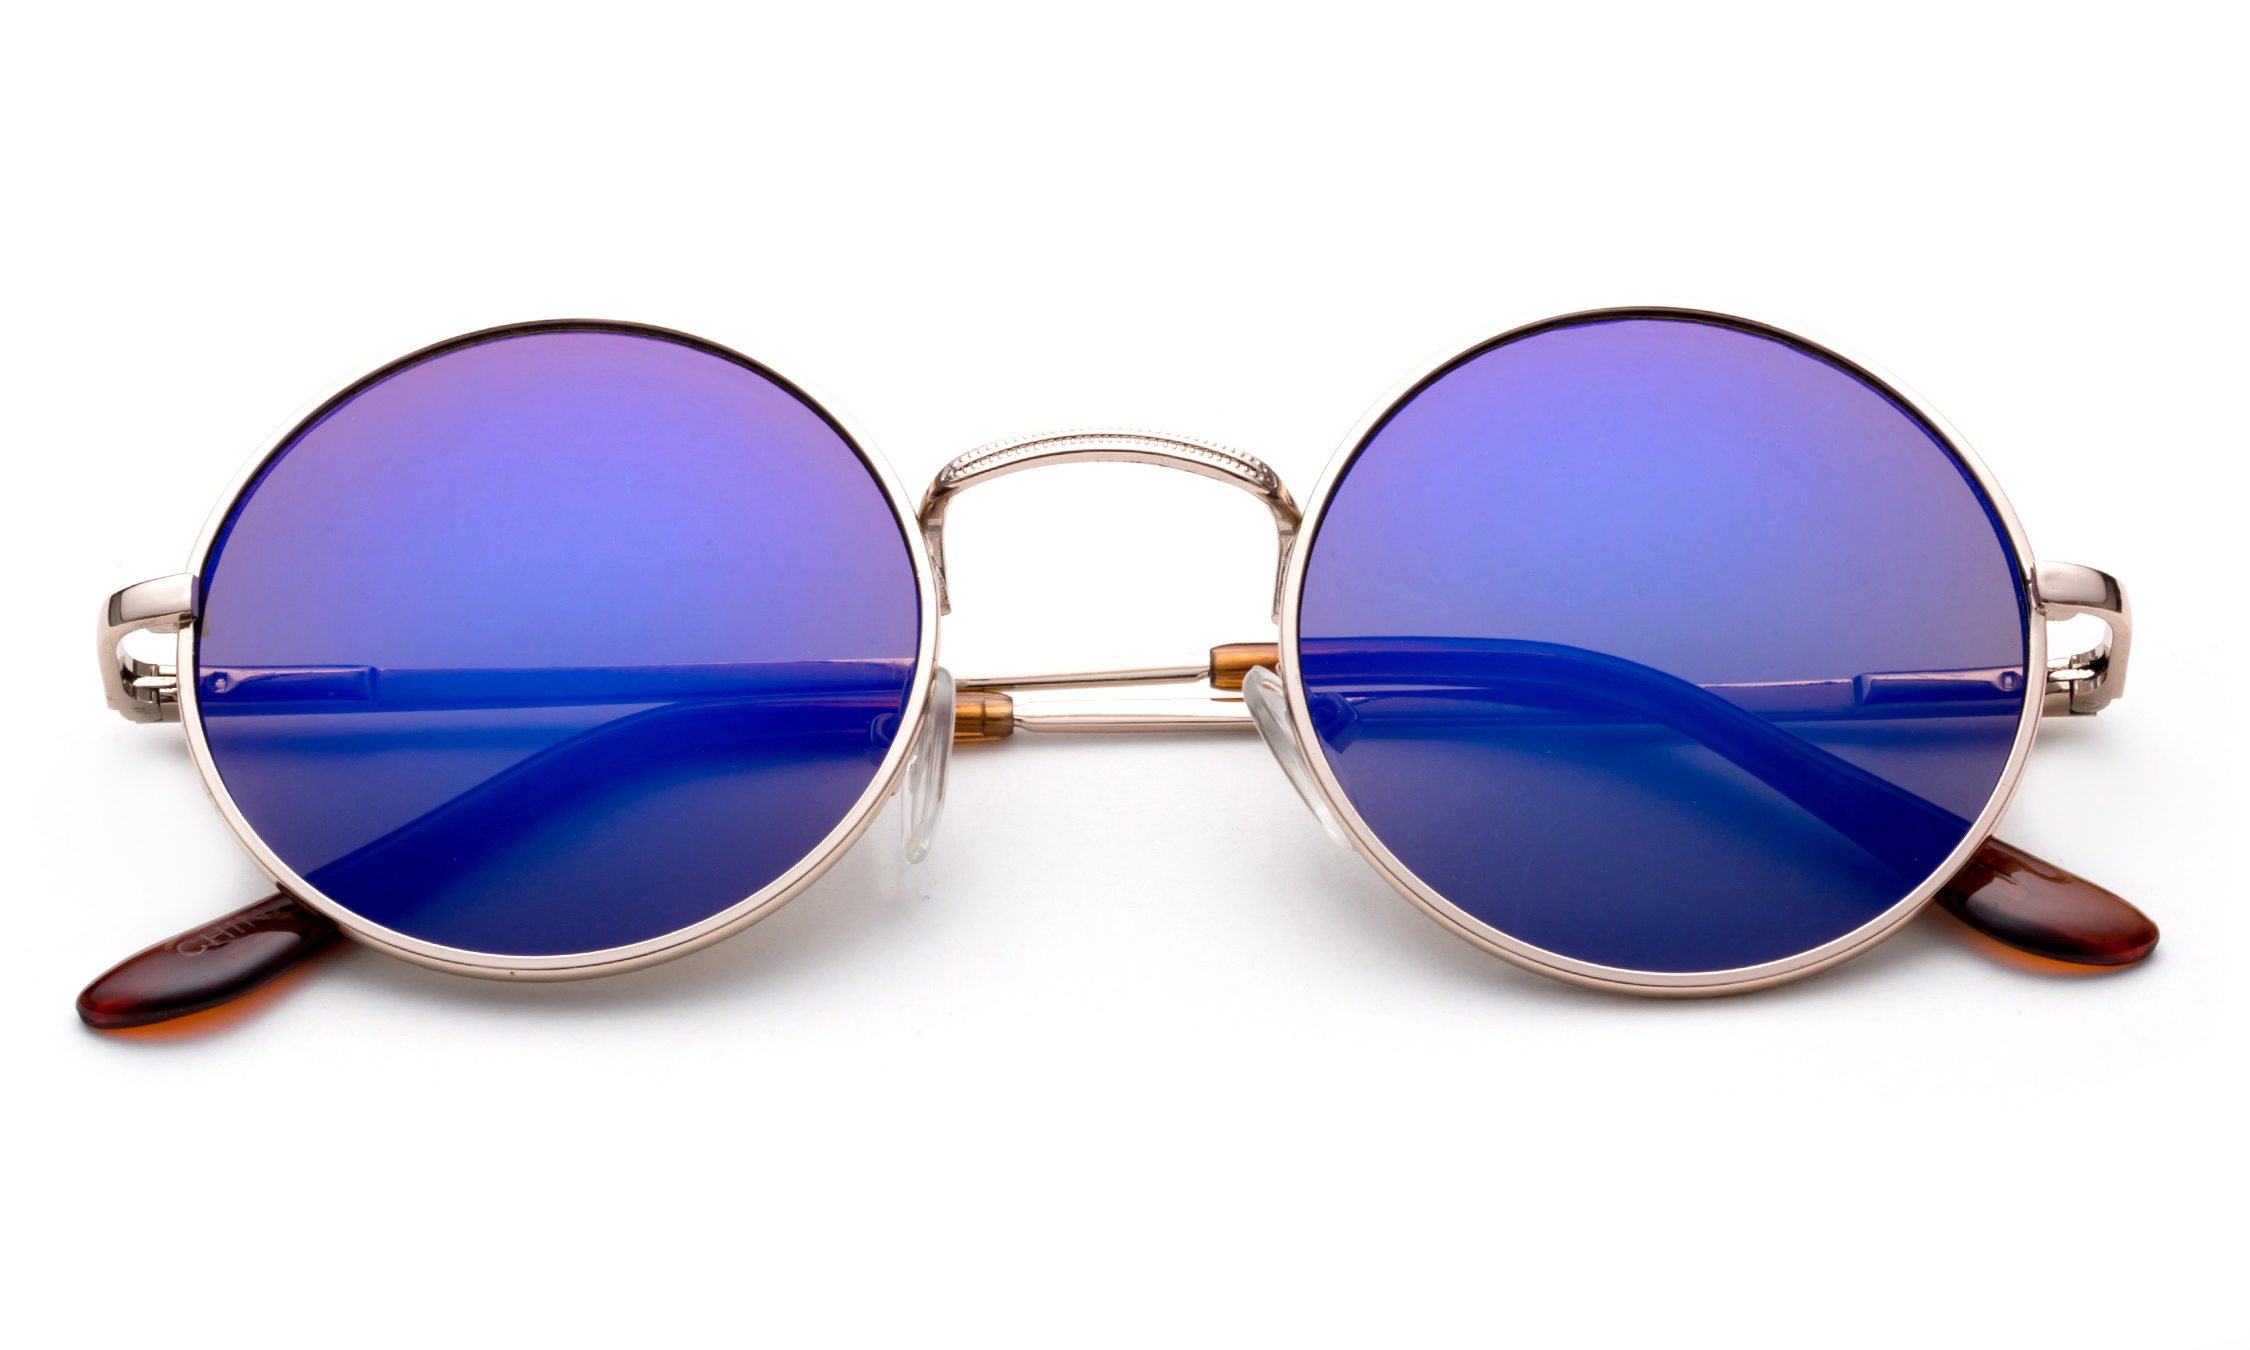 Round Retro John Lennon Sunglasses & Clear Lens Glasses Vintage Round Sunglasses - image 3 of 4